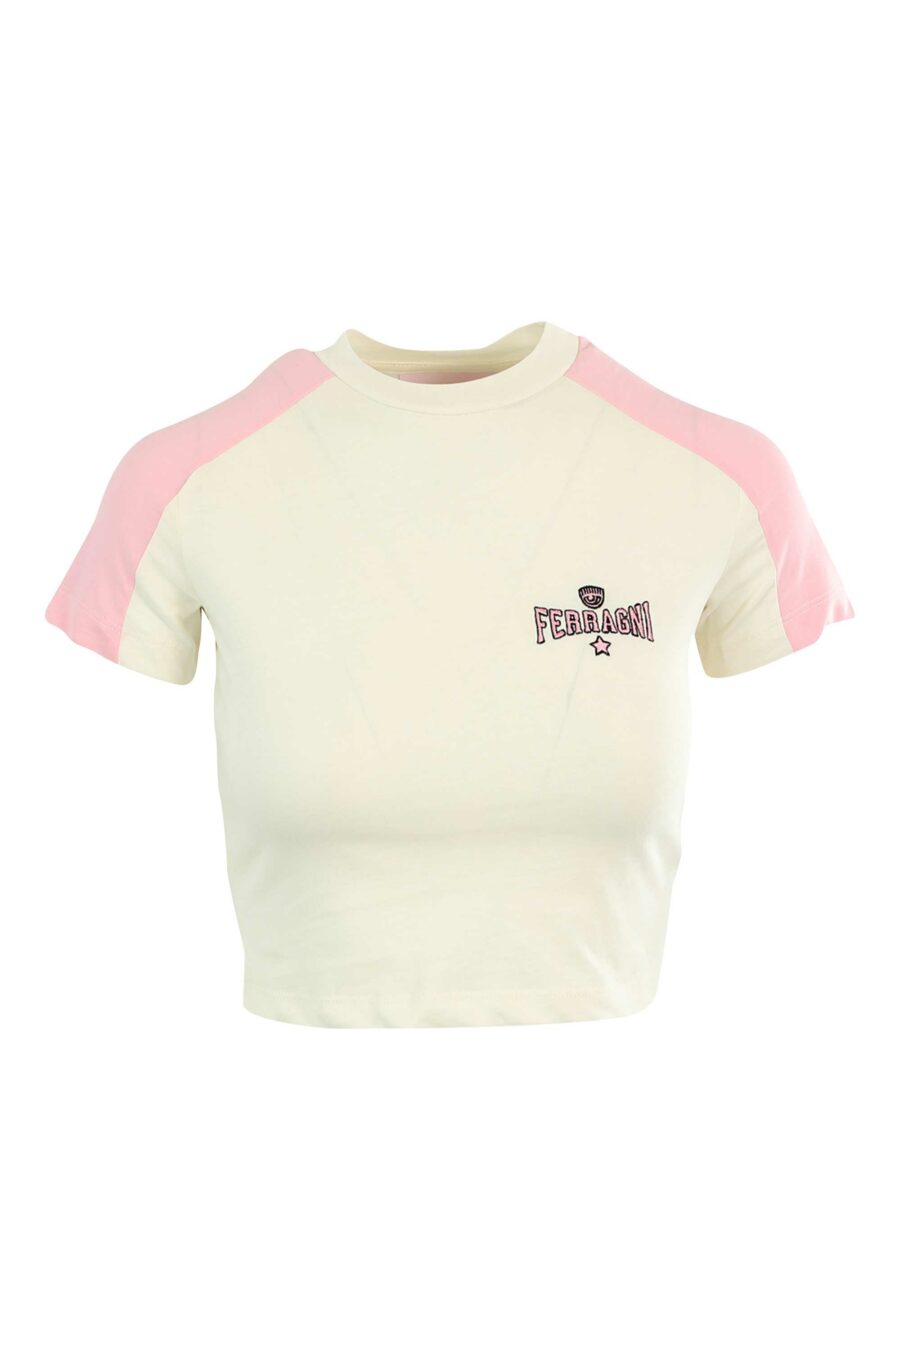 T-shirt blanc avec minilogue rose "ferragni" - 8052672415974